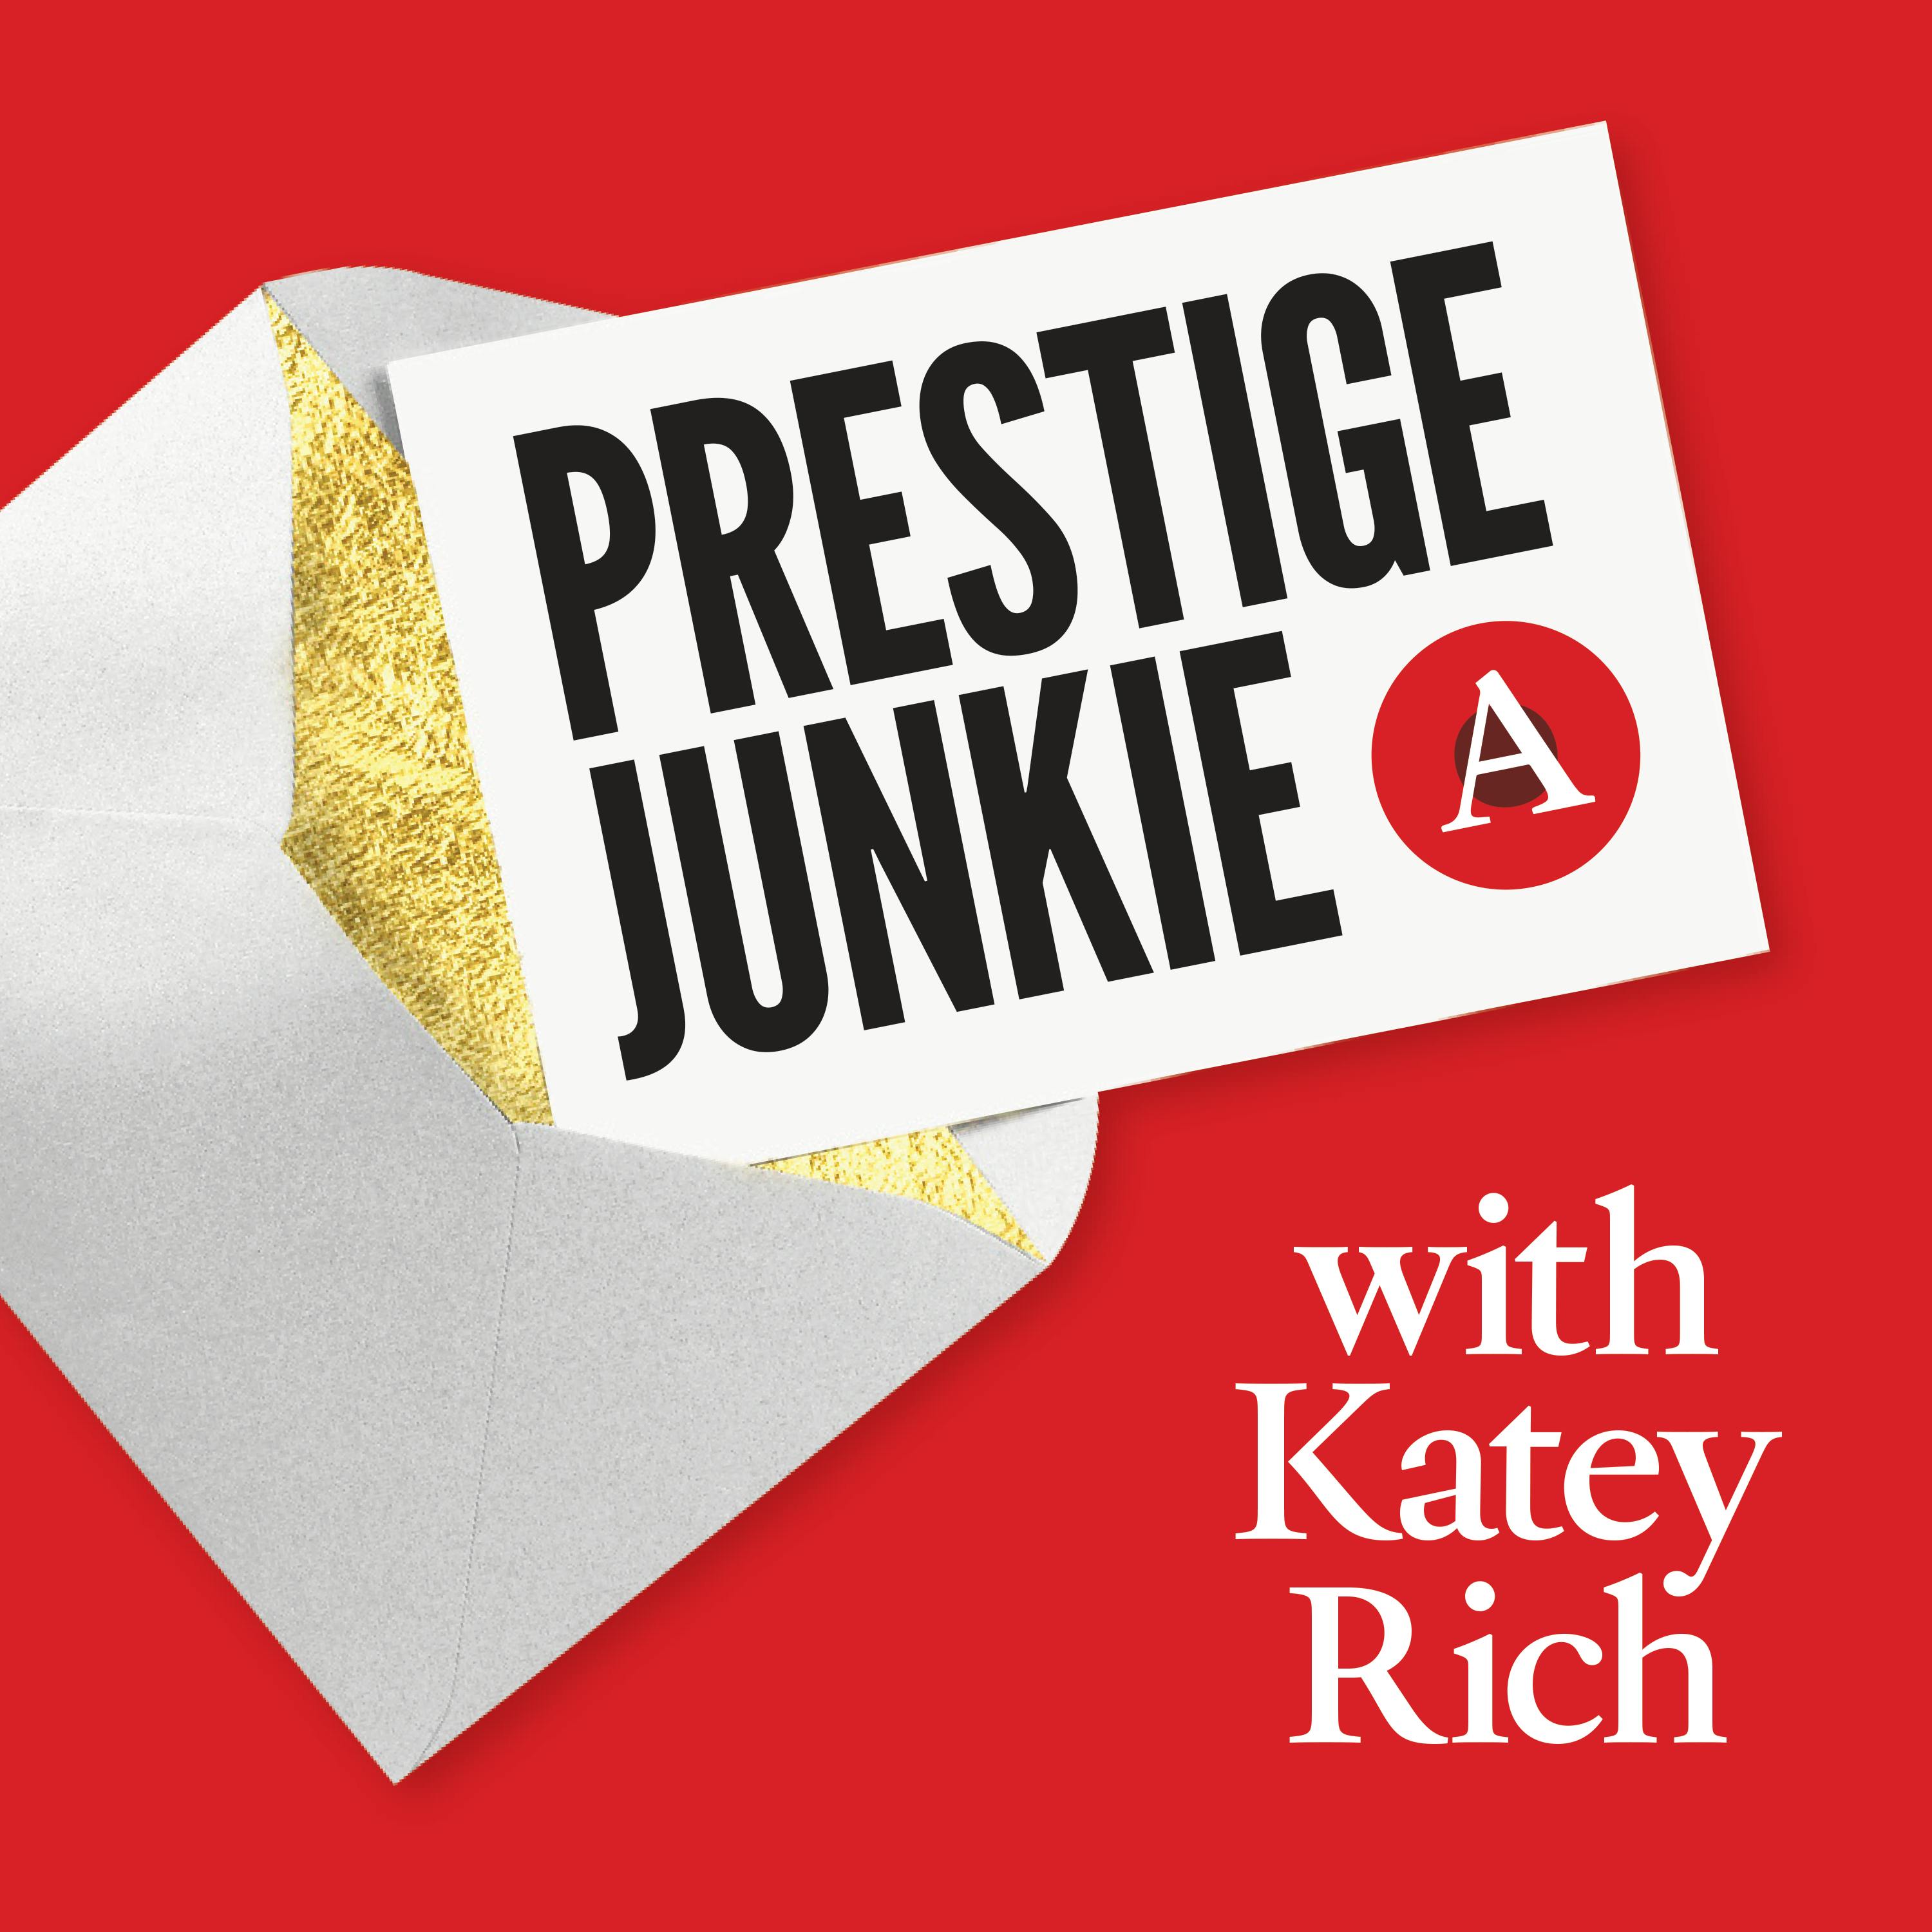 Prestige Junkie Image